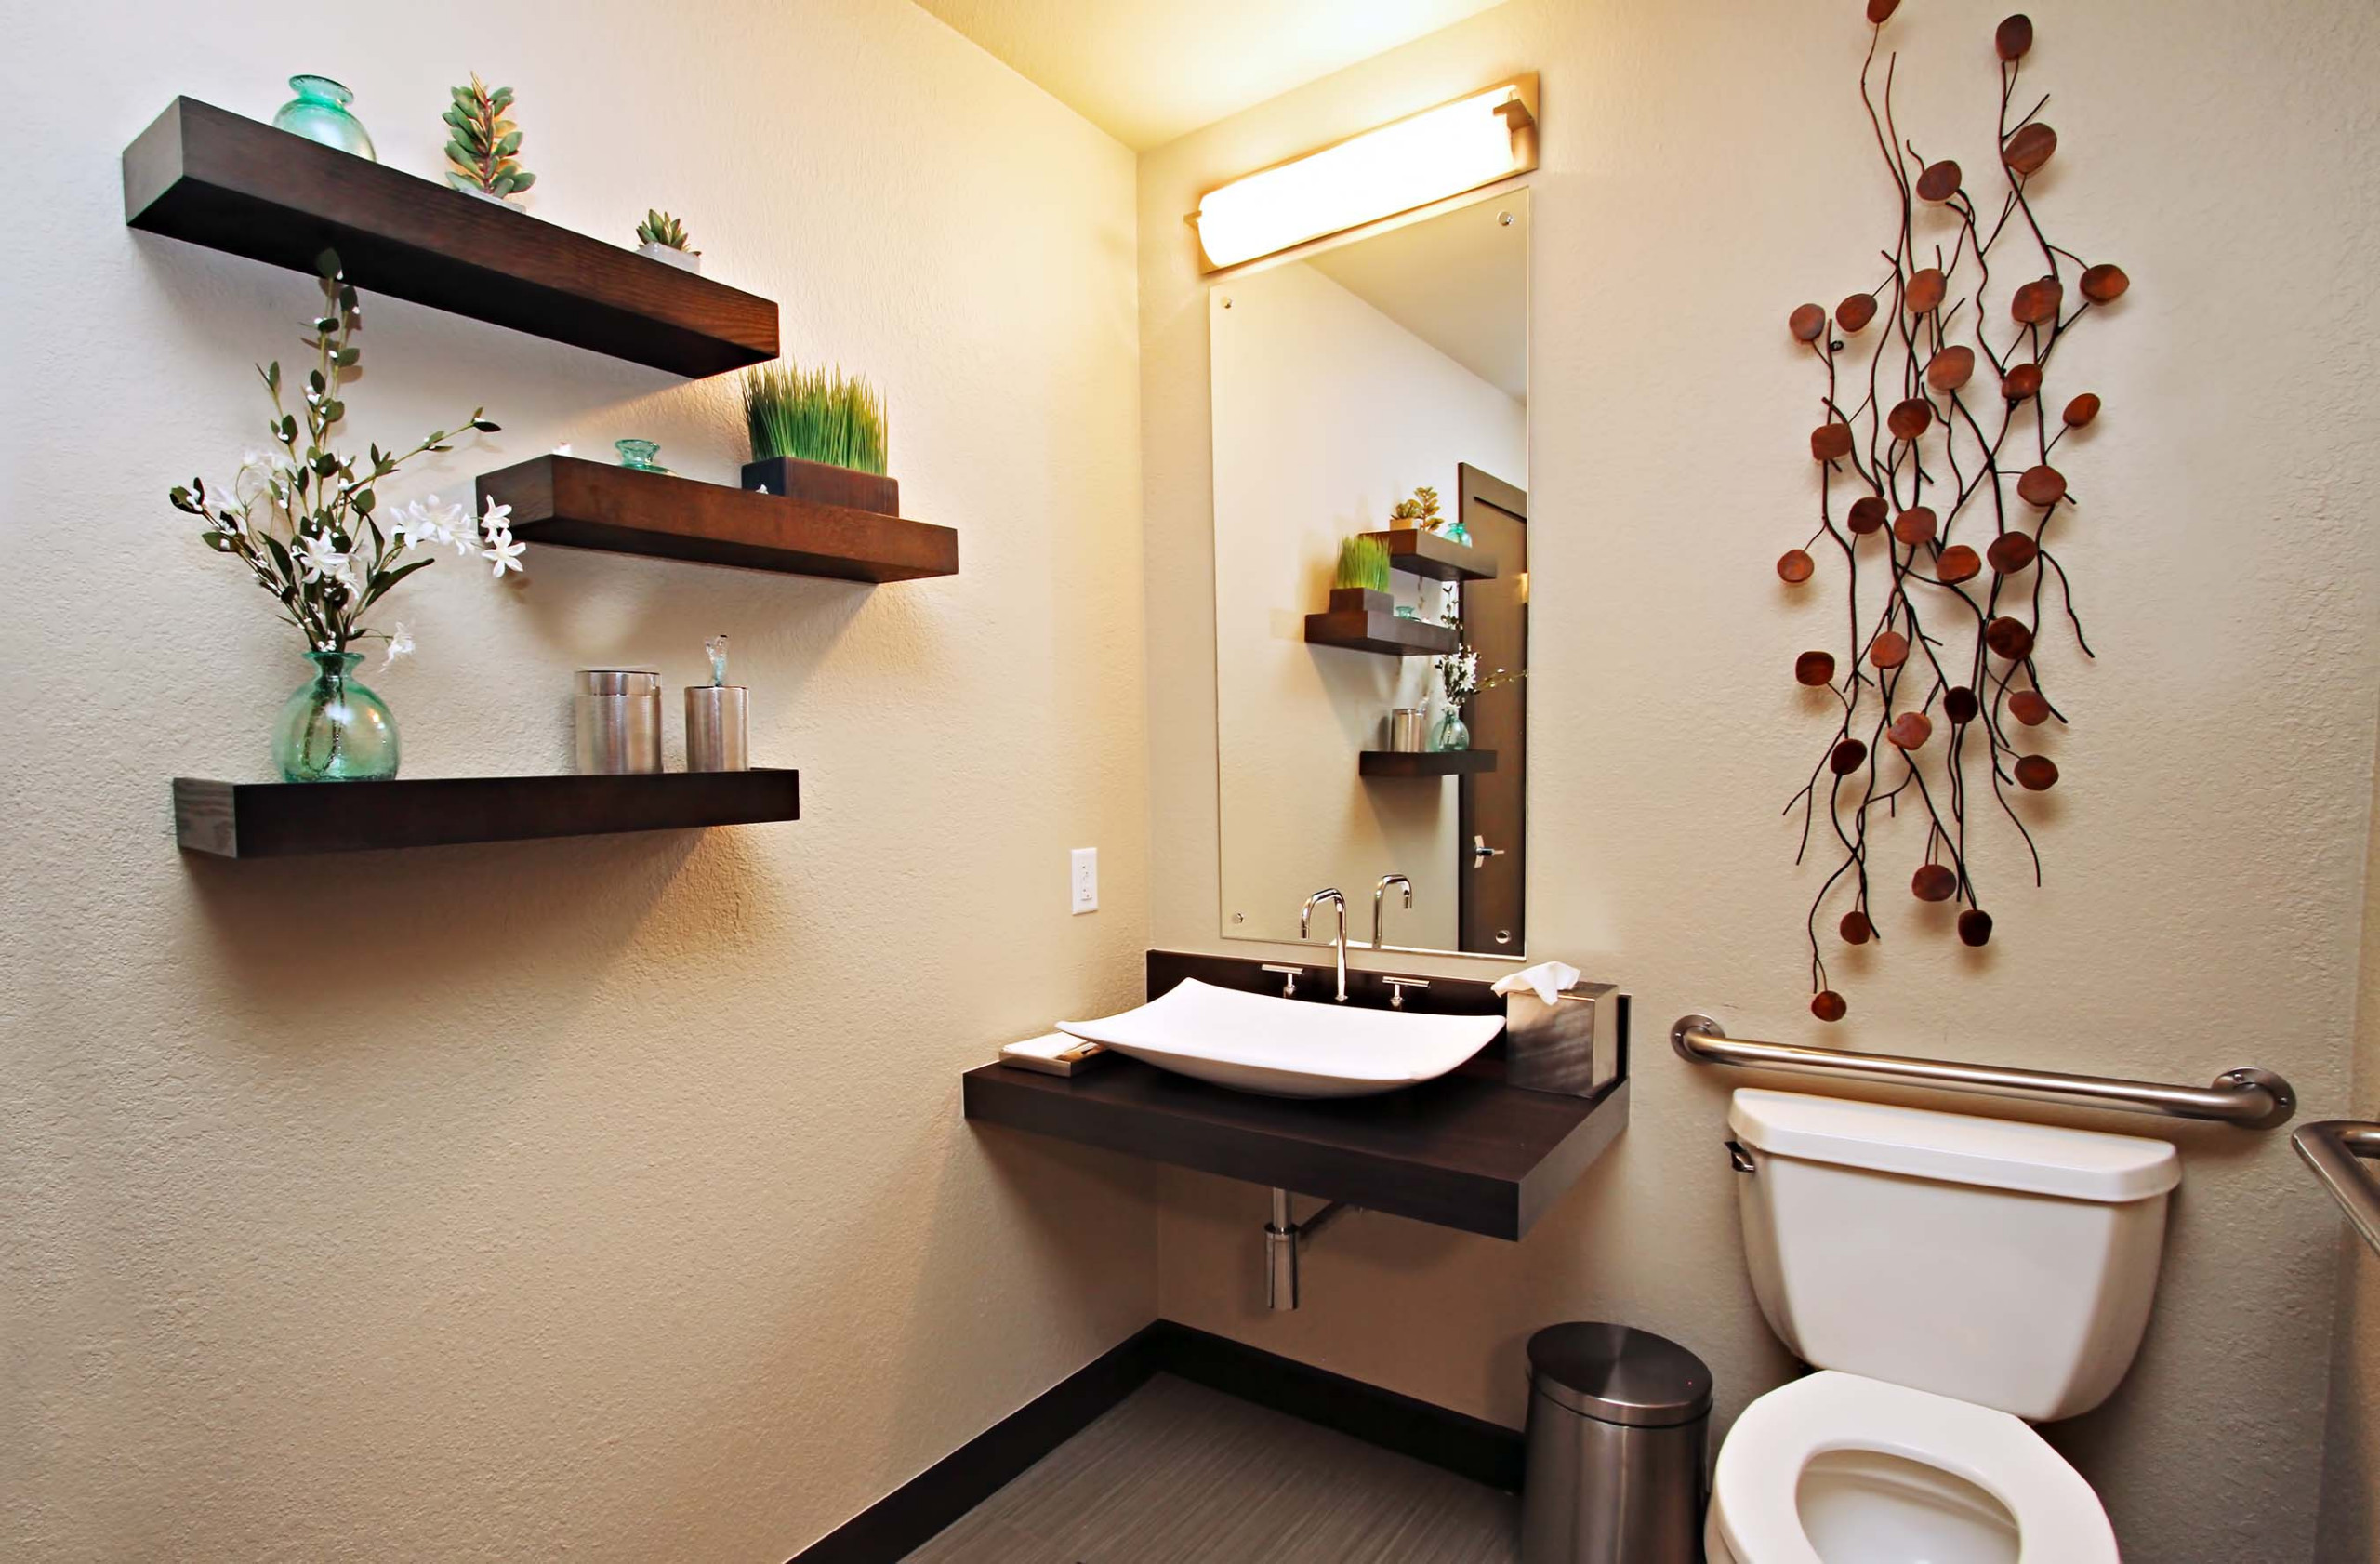 Dental Office - patient restroom - Modern - Denver - by Larson Design |  Houzz